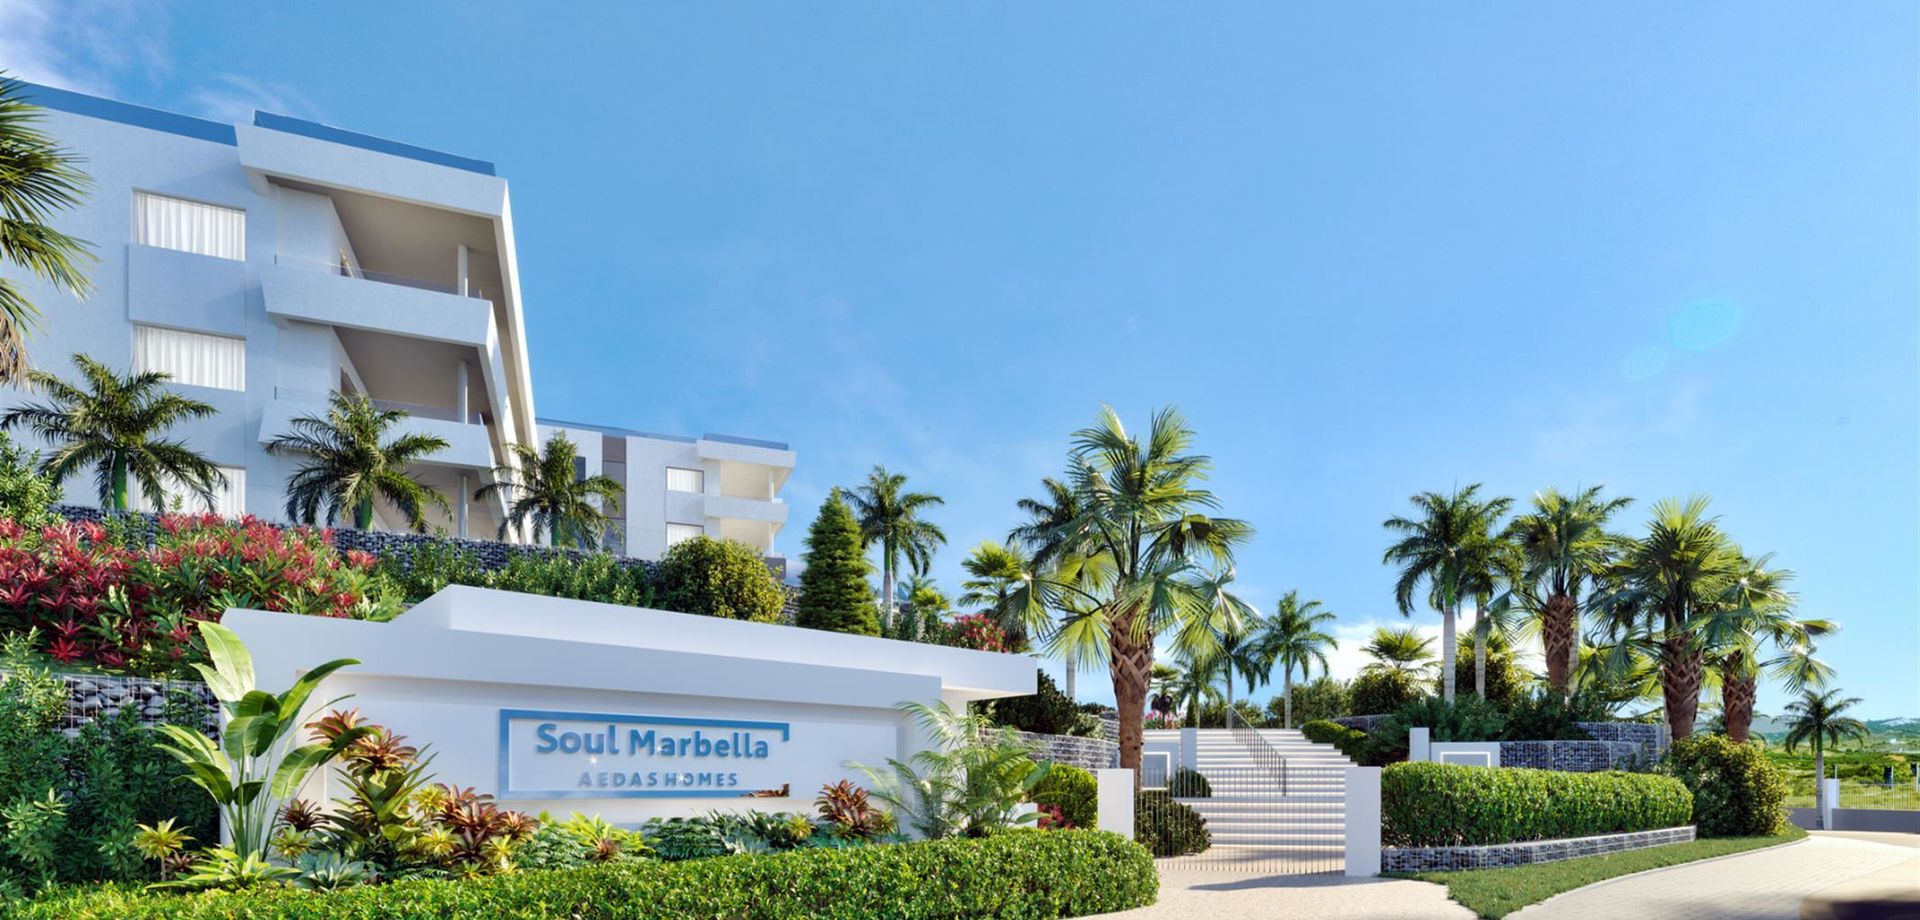 158- Soul Marbella in Marbella